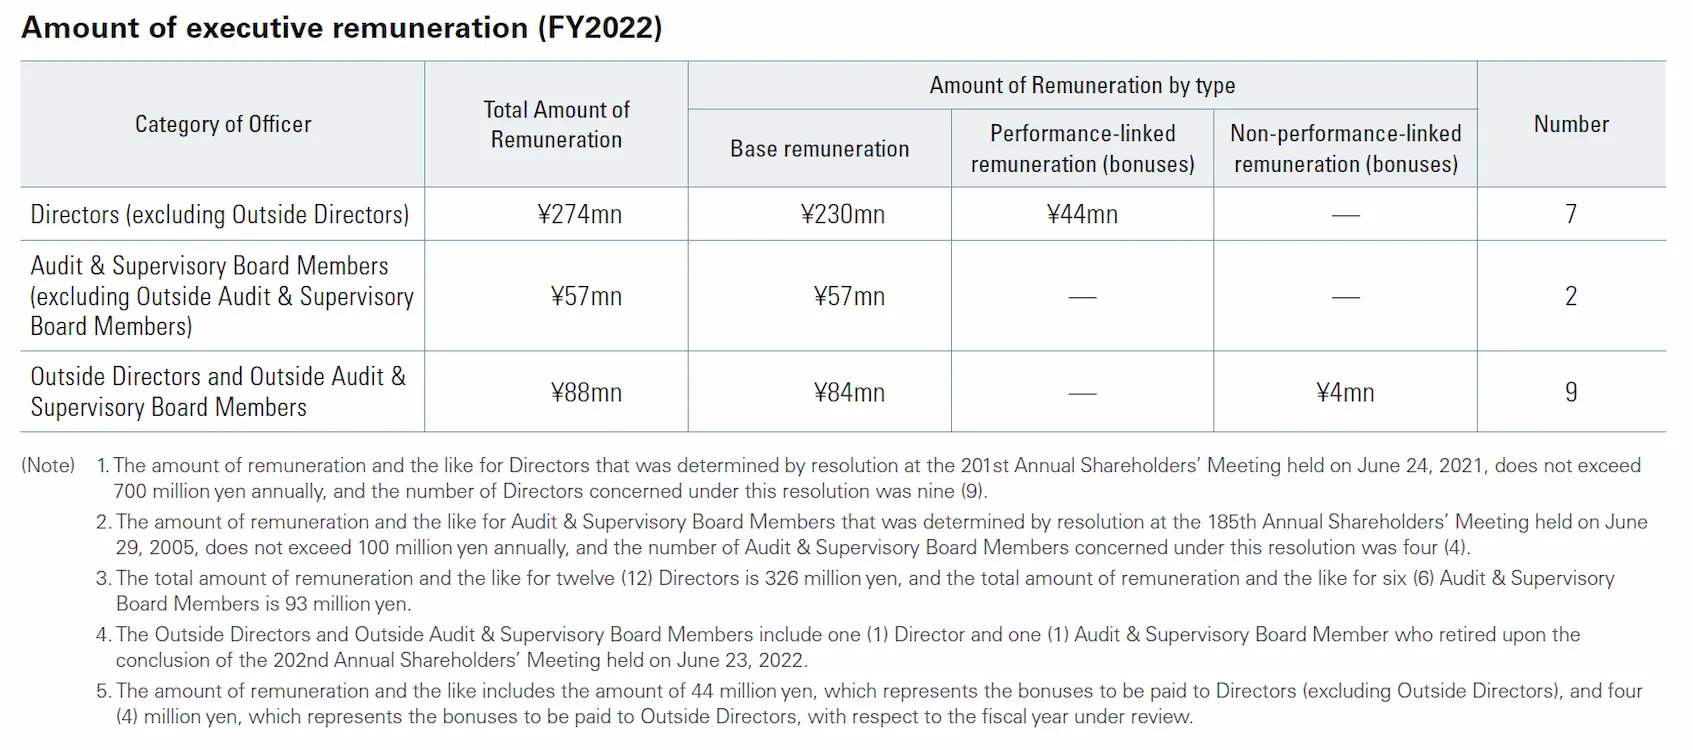 Amount of executive remuneration